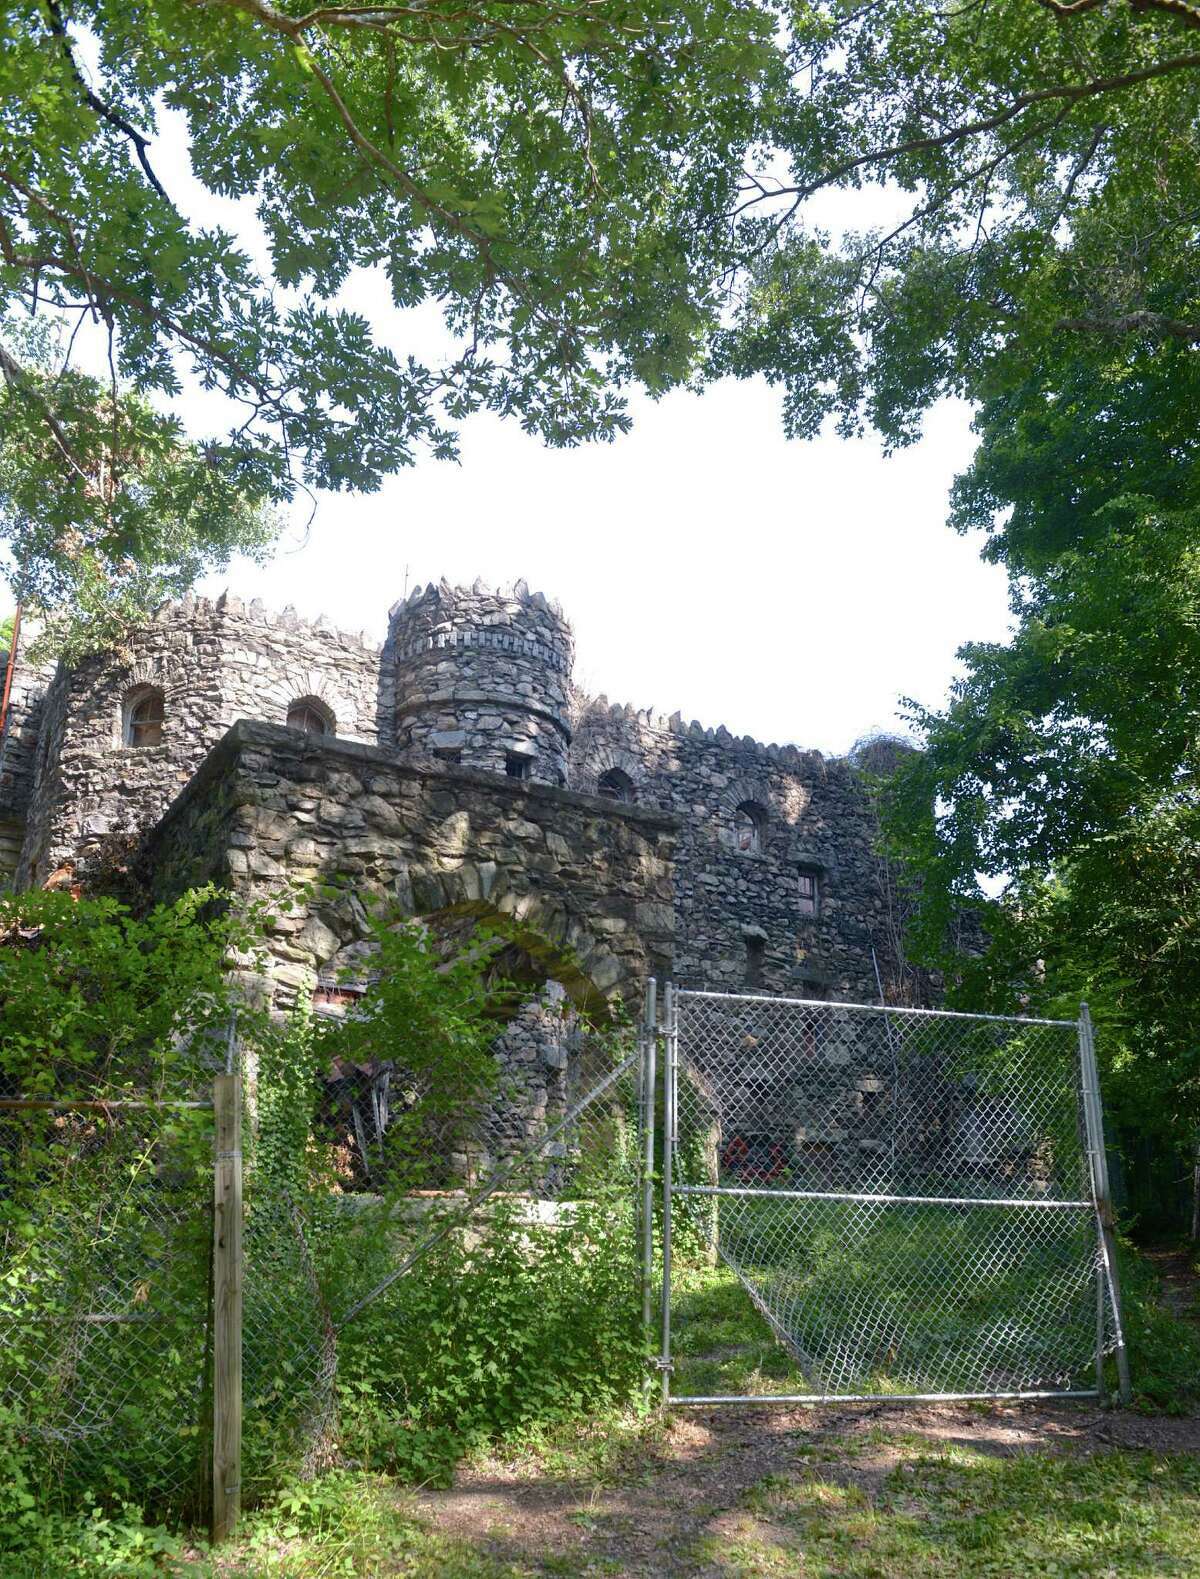 Hearthstone Castle in Danbury's Tarrywile Park. September 1, 2015, in Danbury, Conn.